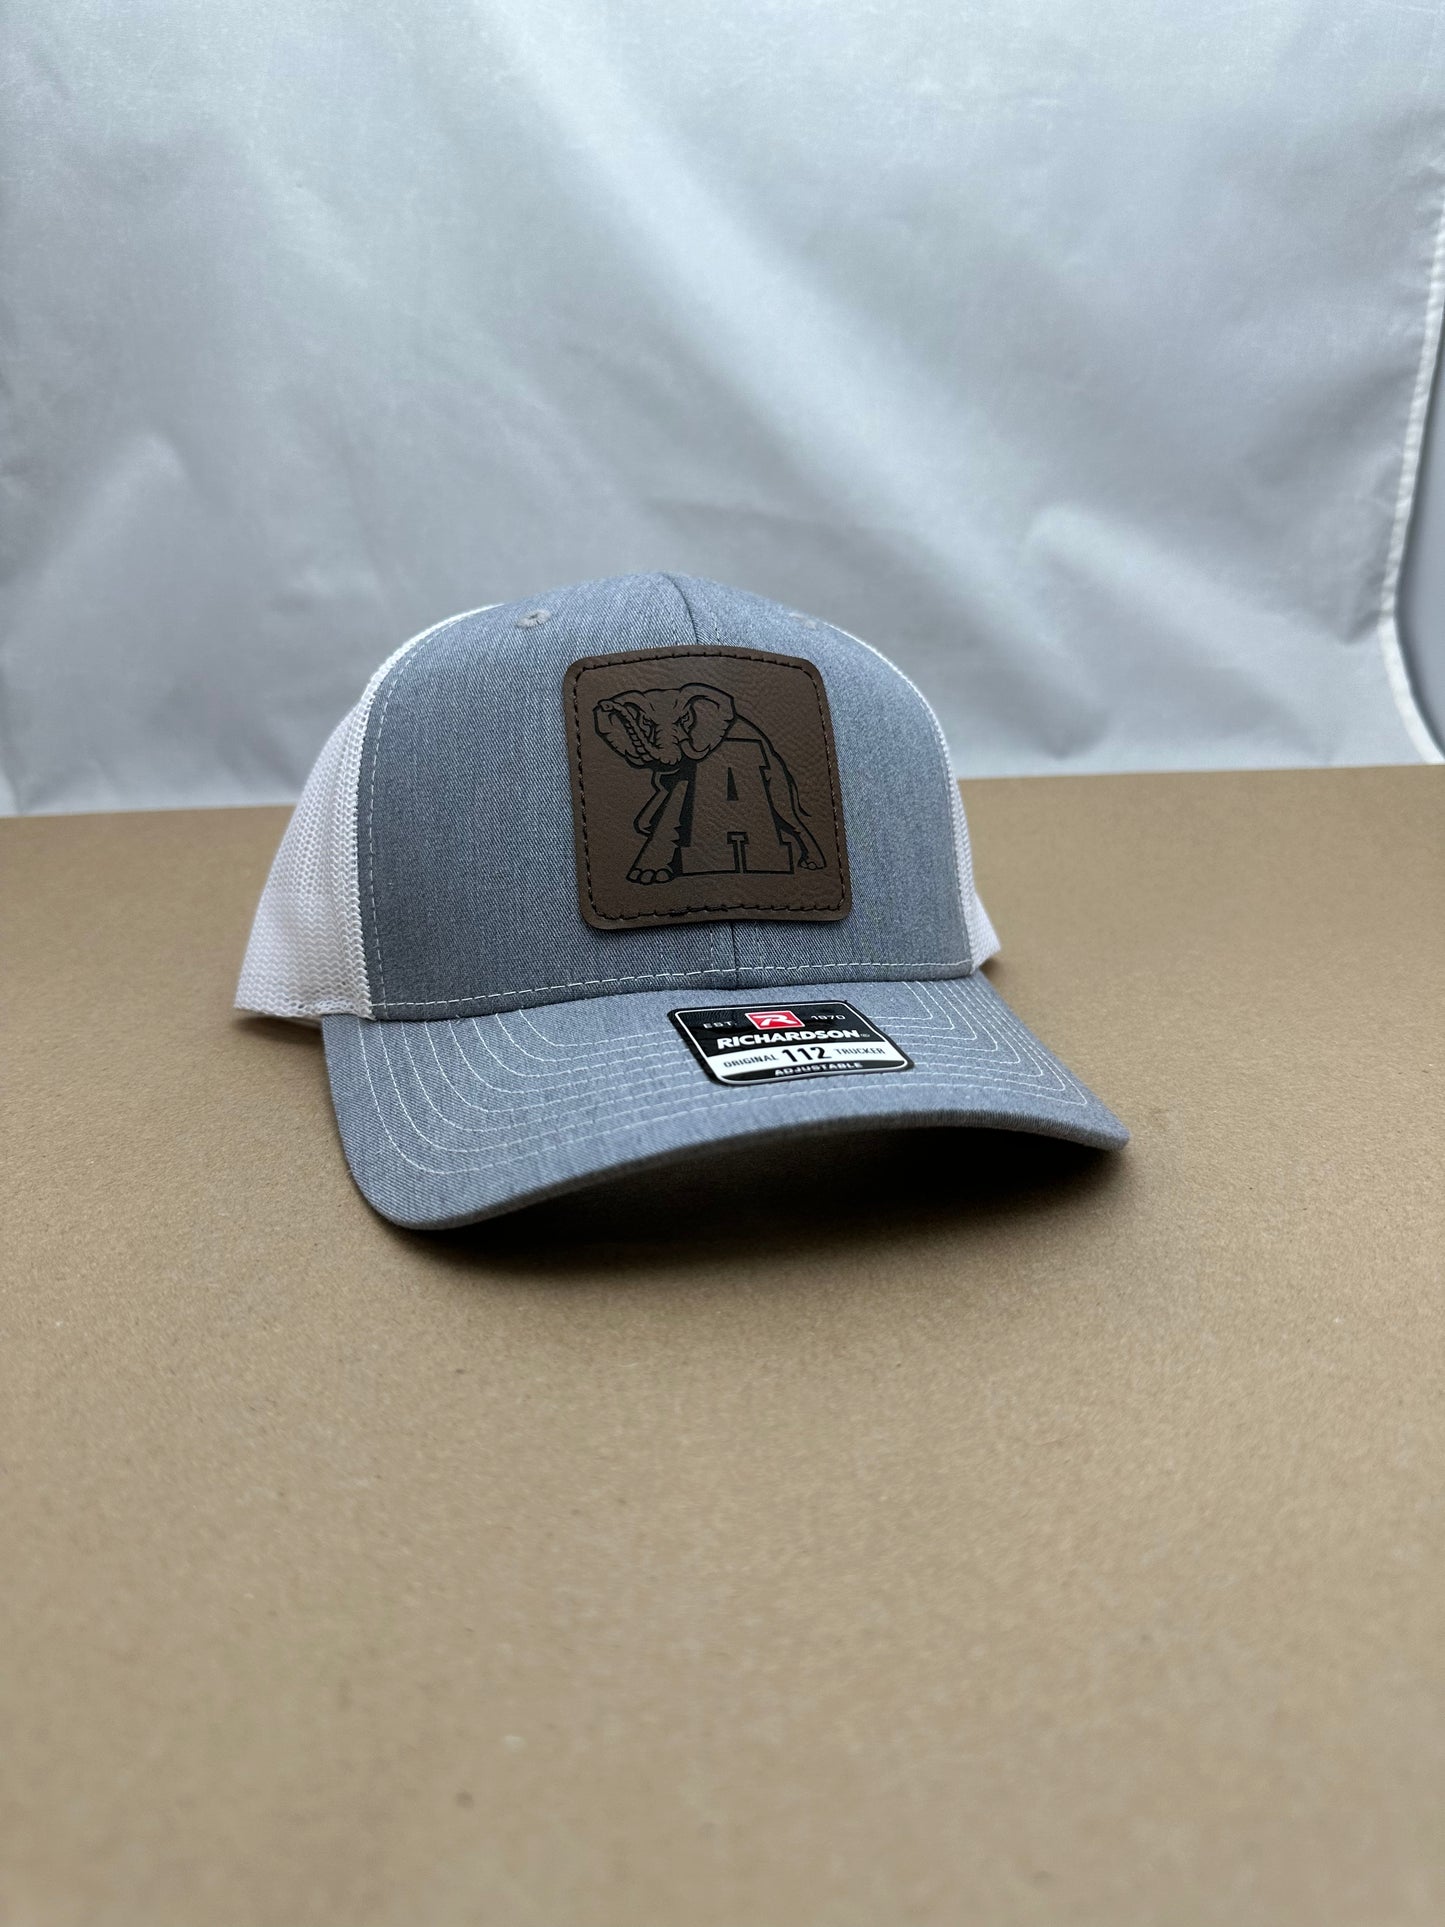 Richardson 112 Trucker Snap Back Laser Engraved Leather Patch Hat